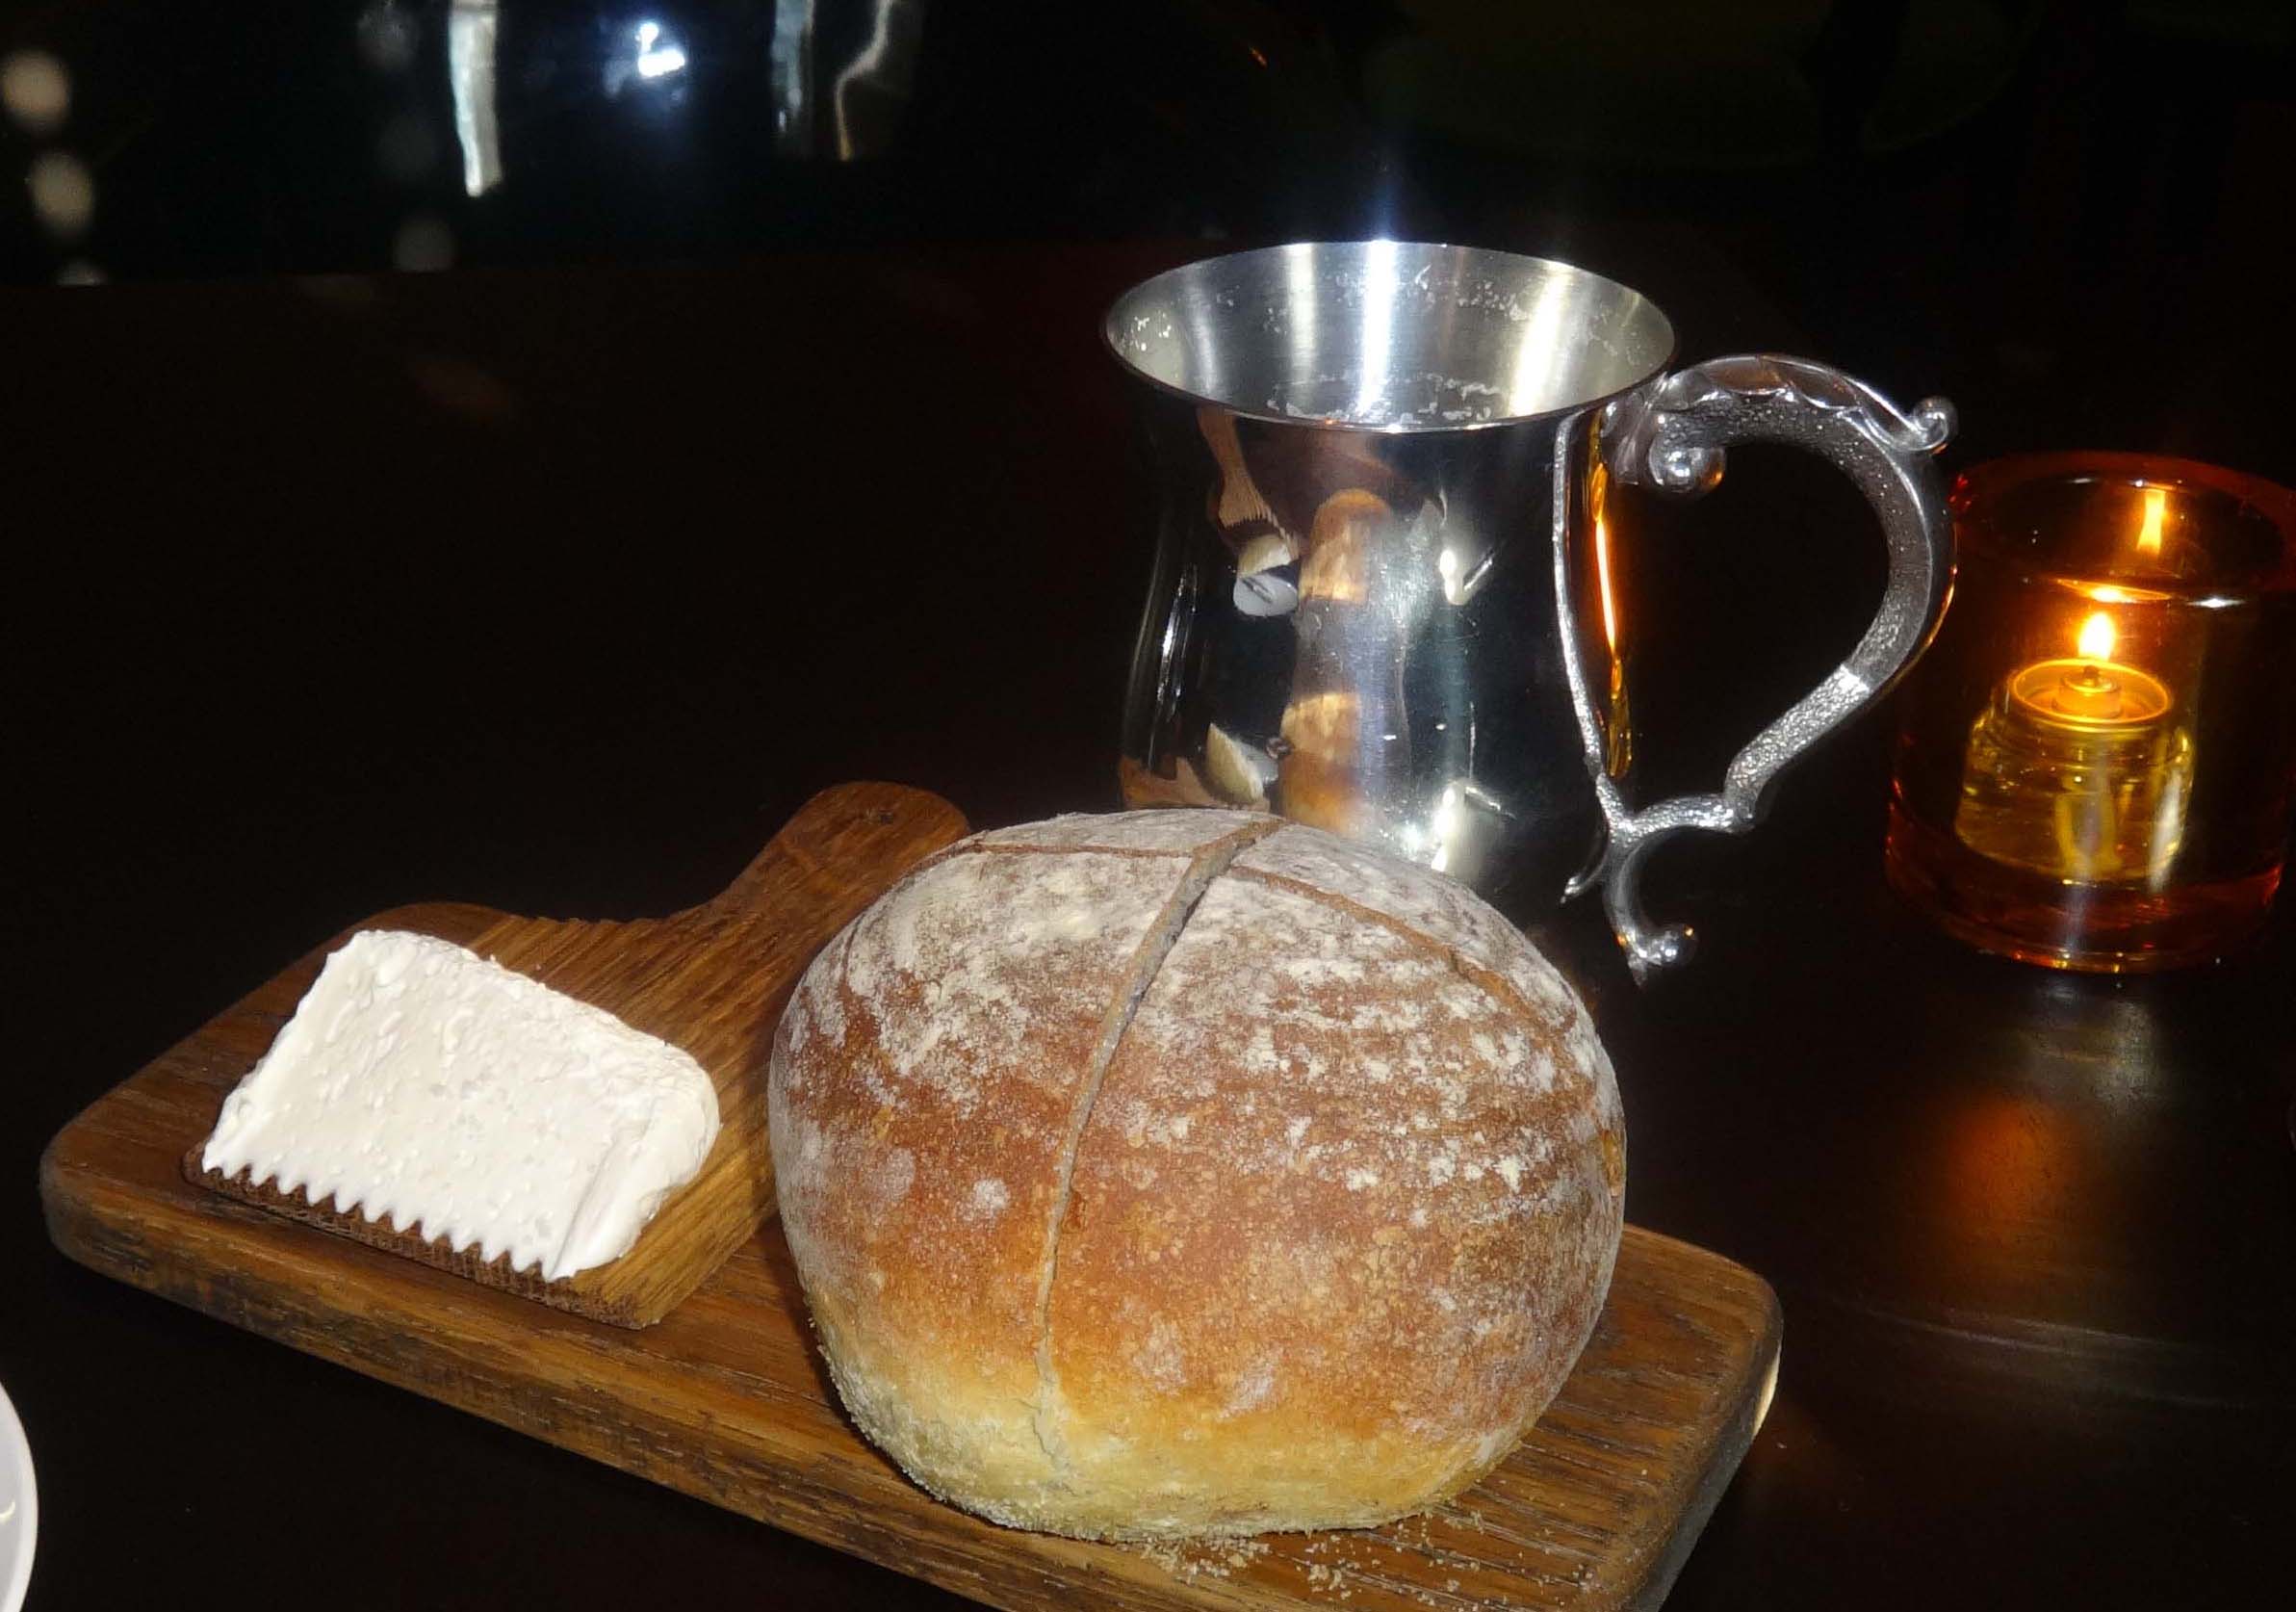 Clocktower bread